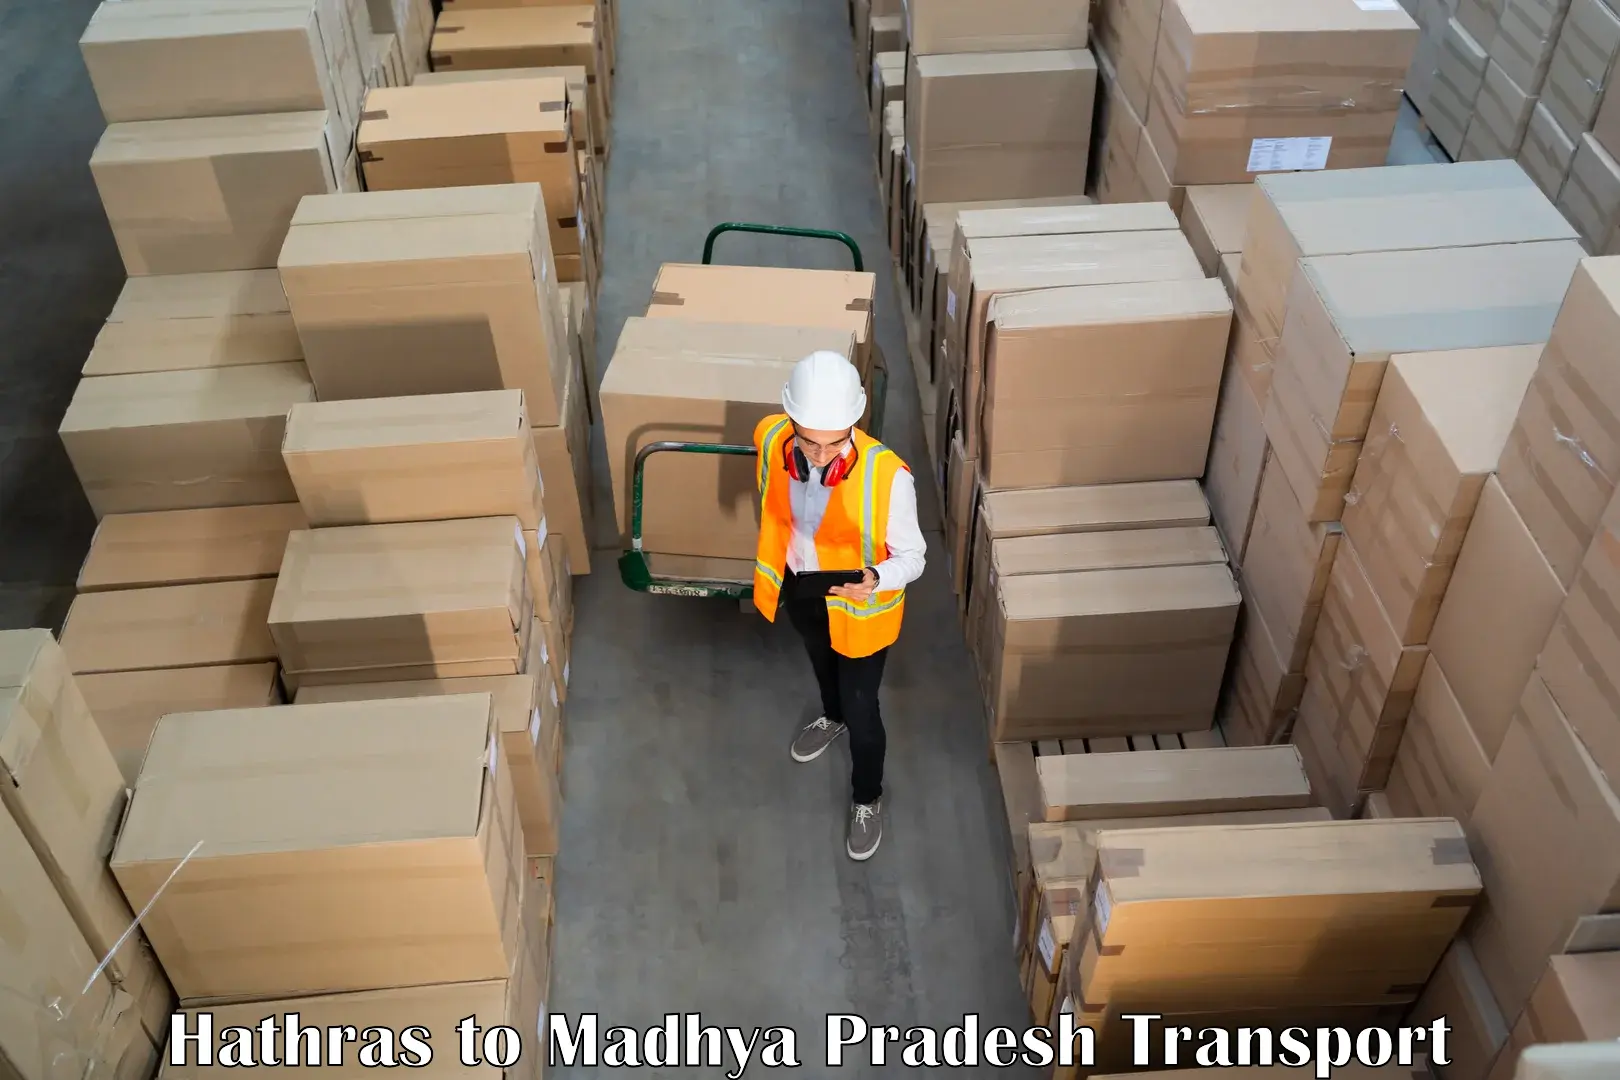 Truck transport companies in India Hathras to Datia